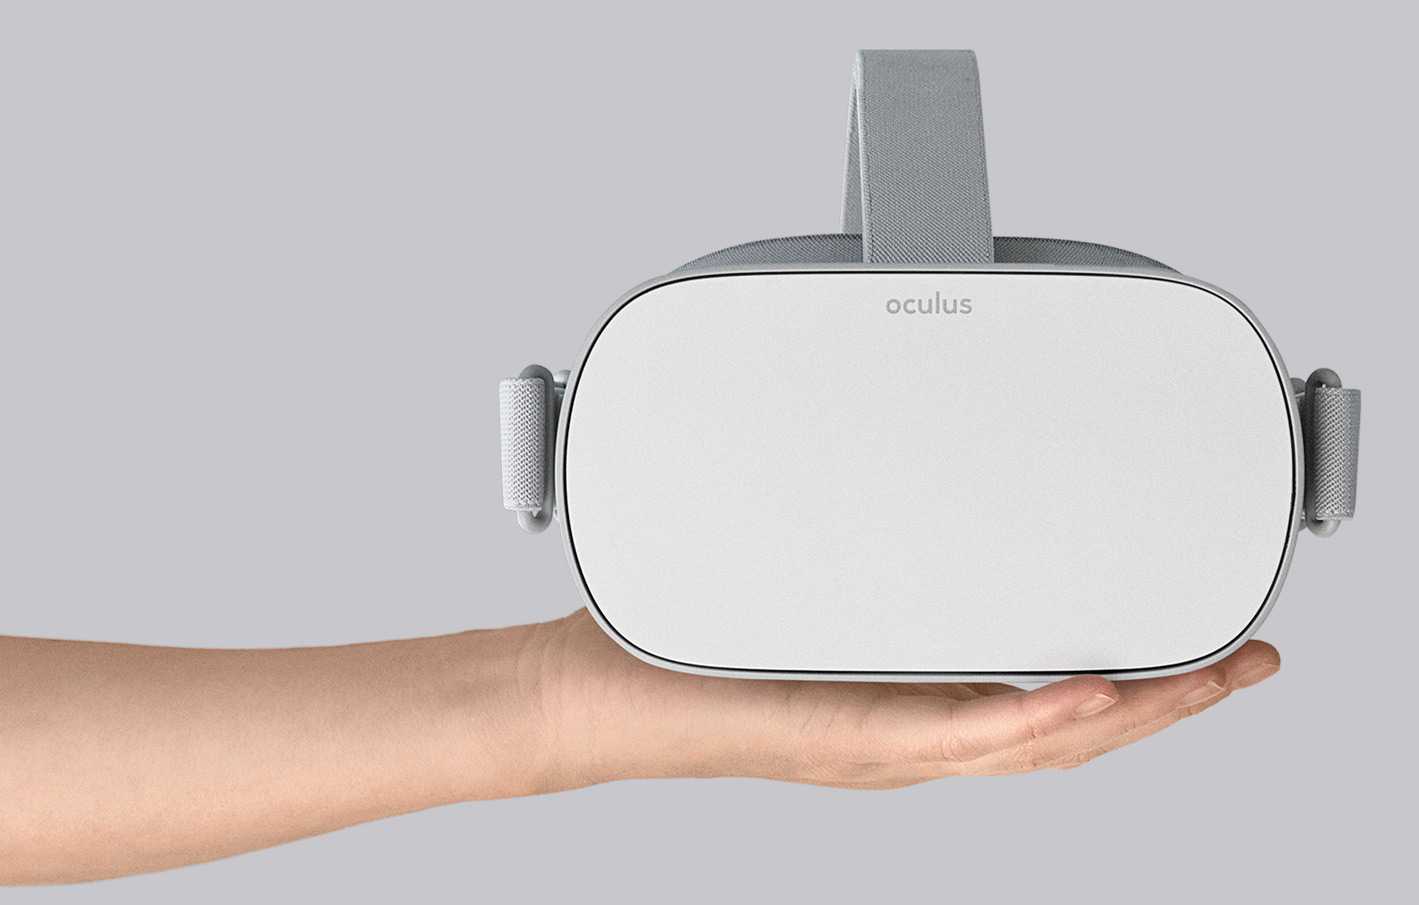 Oculus announces a new VR Headset Oculus GO